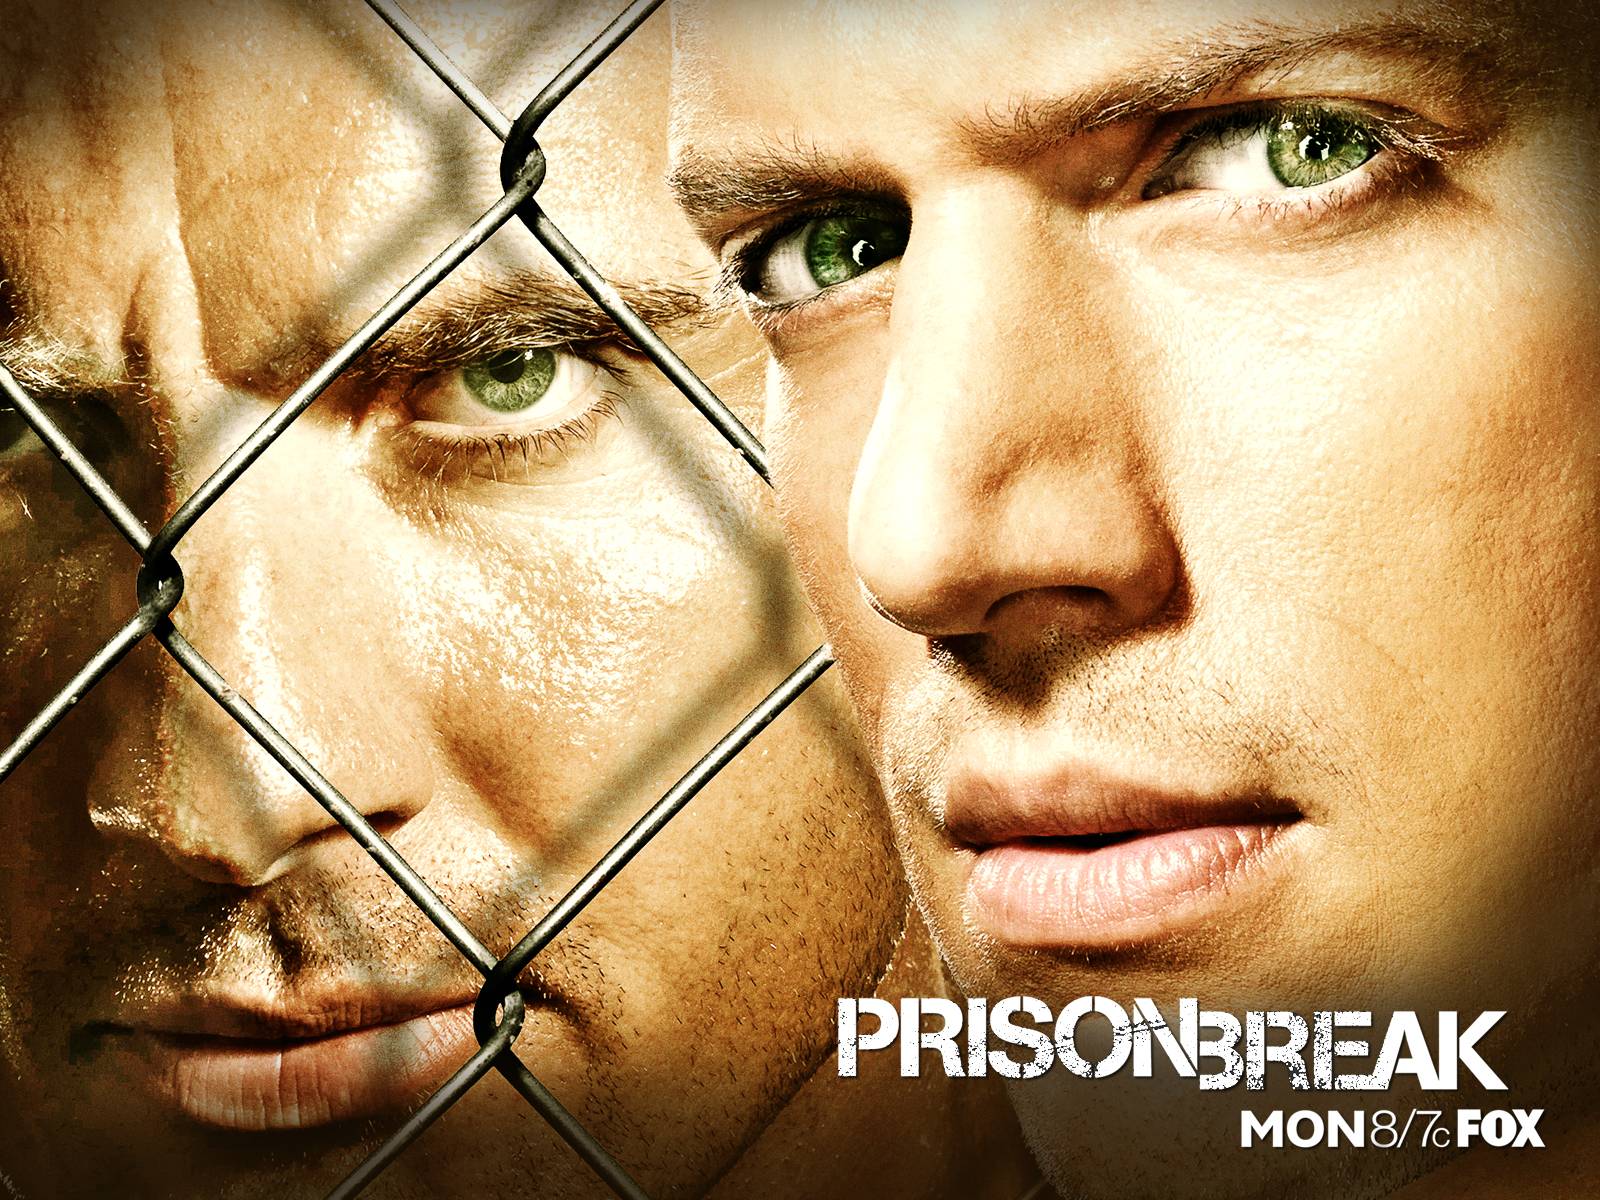 prison break season 4 download 720p